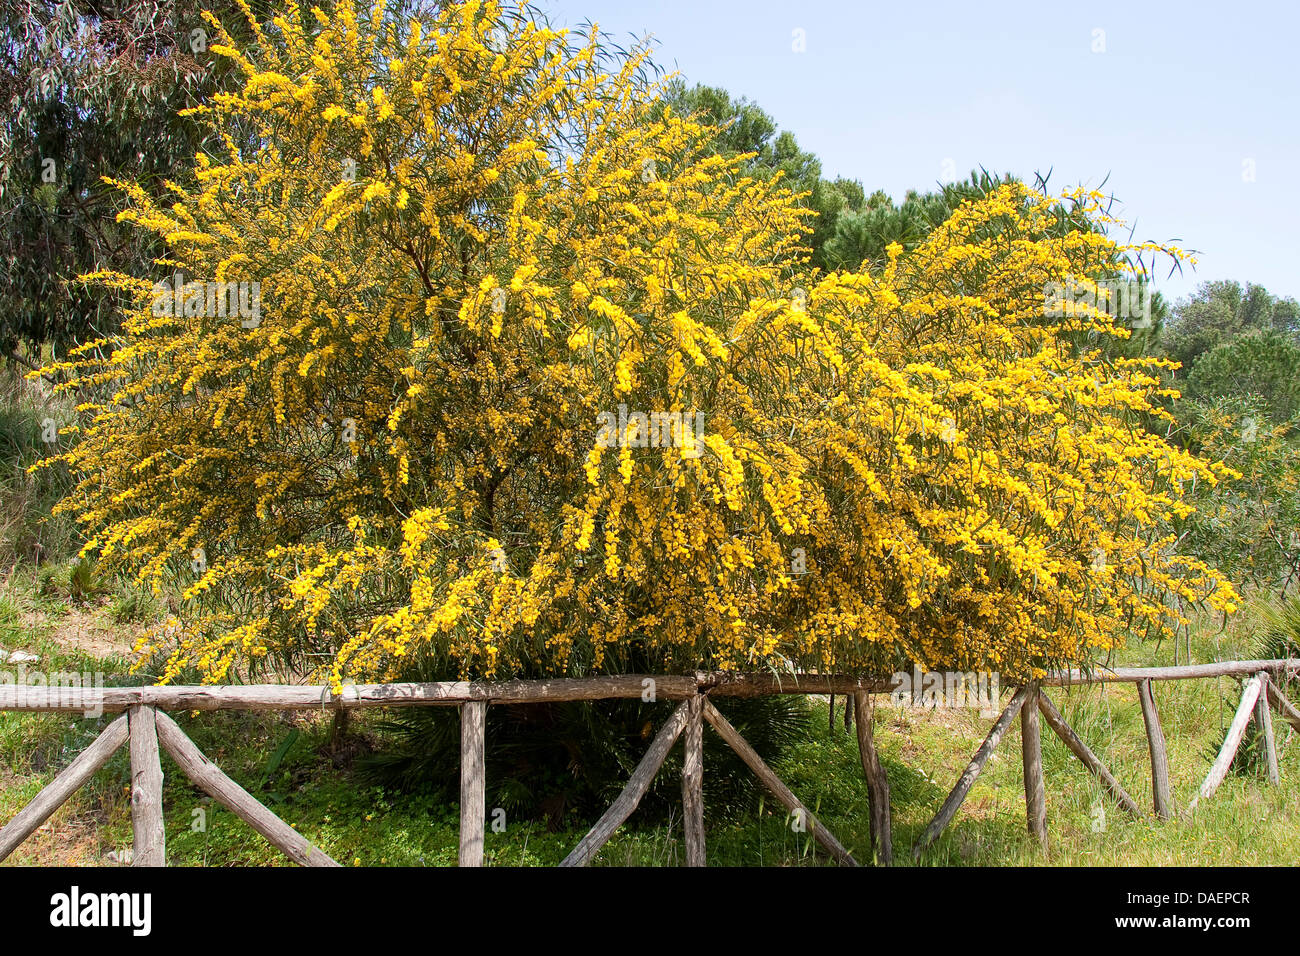 Coojong, Golden wreath wattle, Orange wattle, Blue-leafed wattle, Western Australian golden wattle, Port Jackson willow (Acacia saligna), blooming Stock Photo